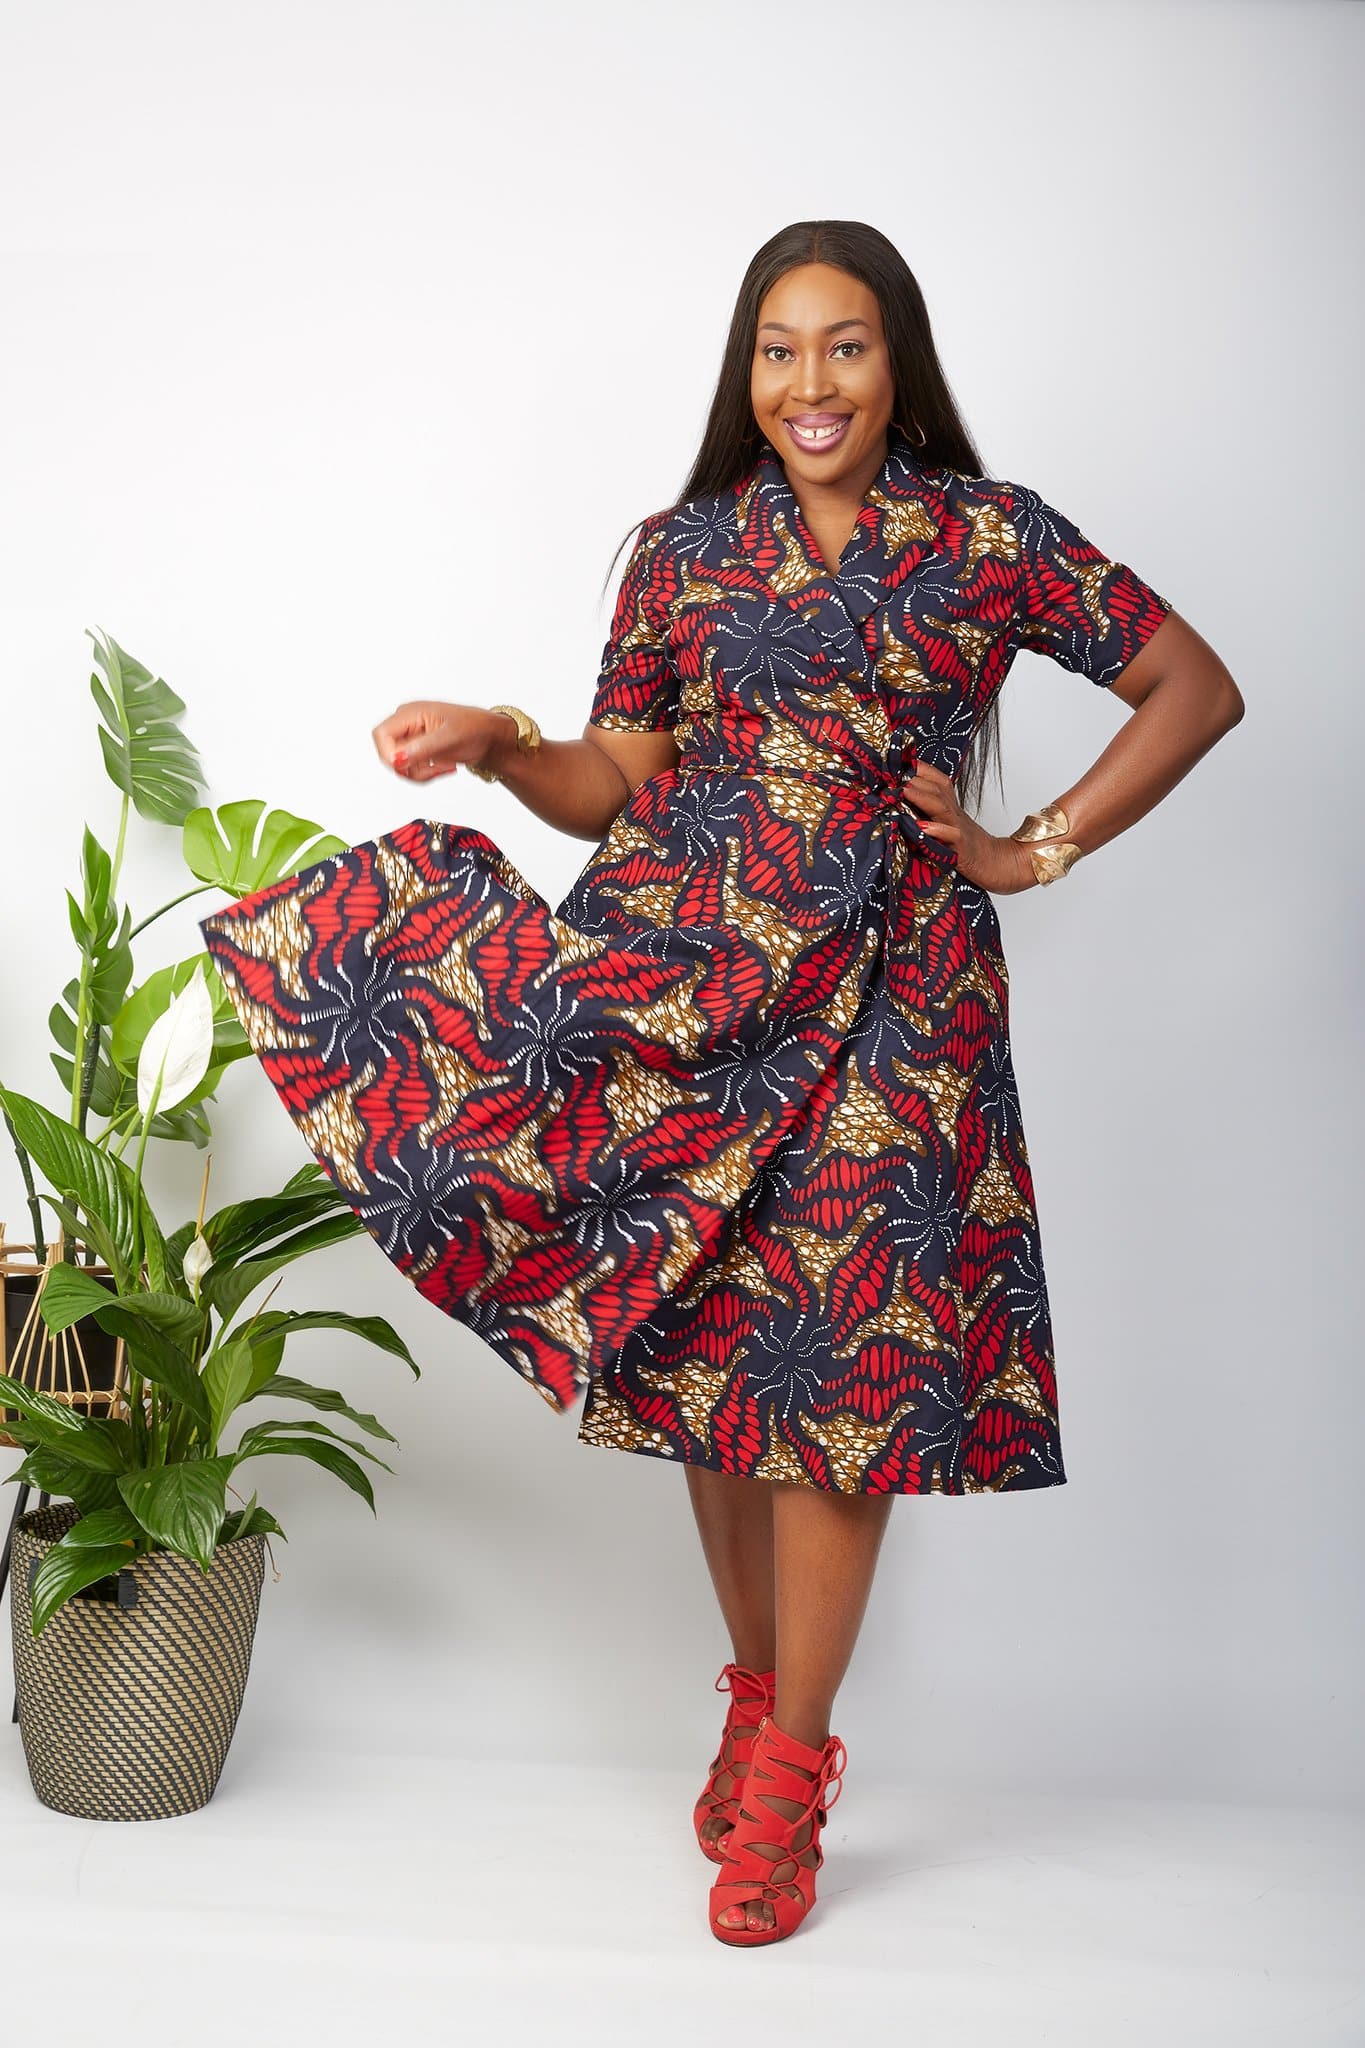 Vibrant African print Maroon Midi summer dress - Shop CUMO London African fashion clothing brand